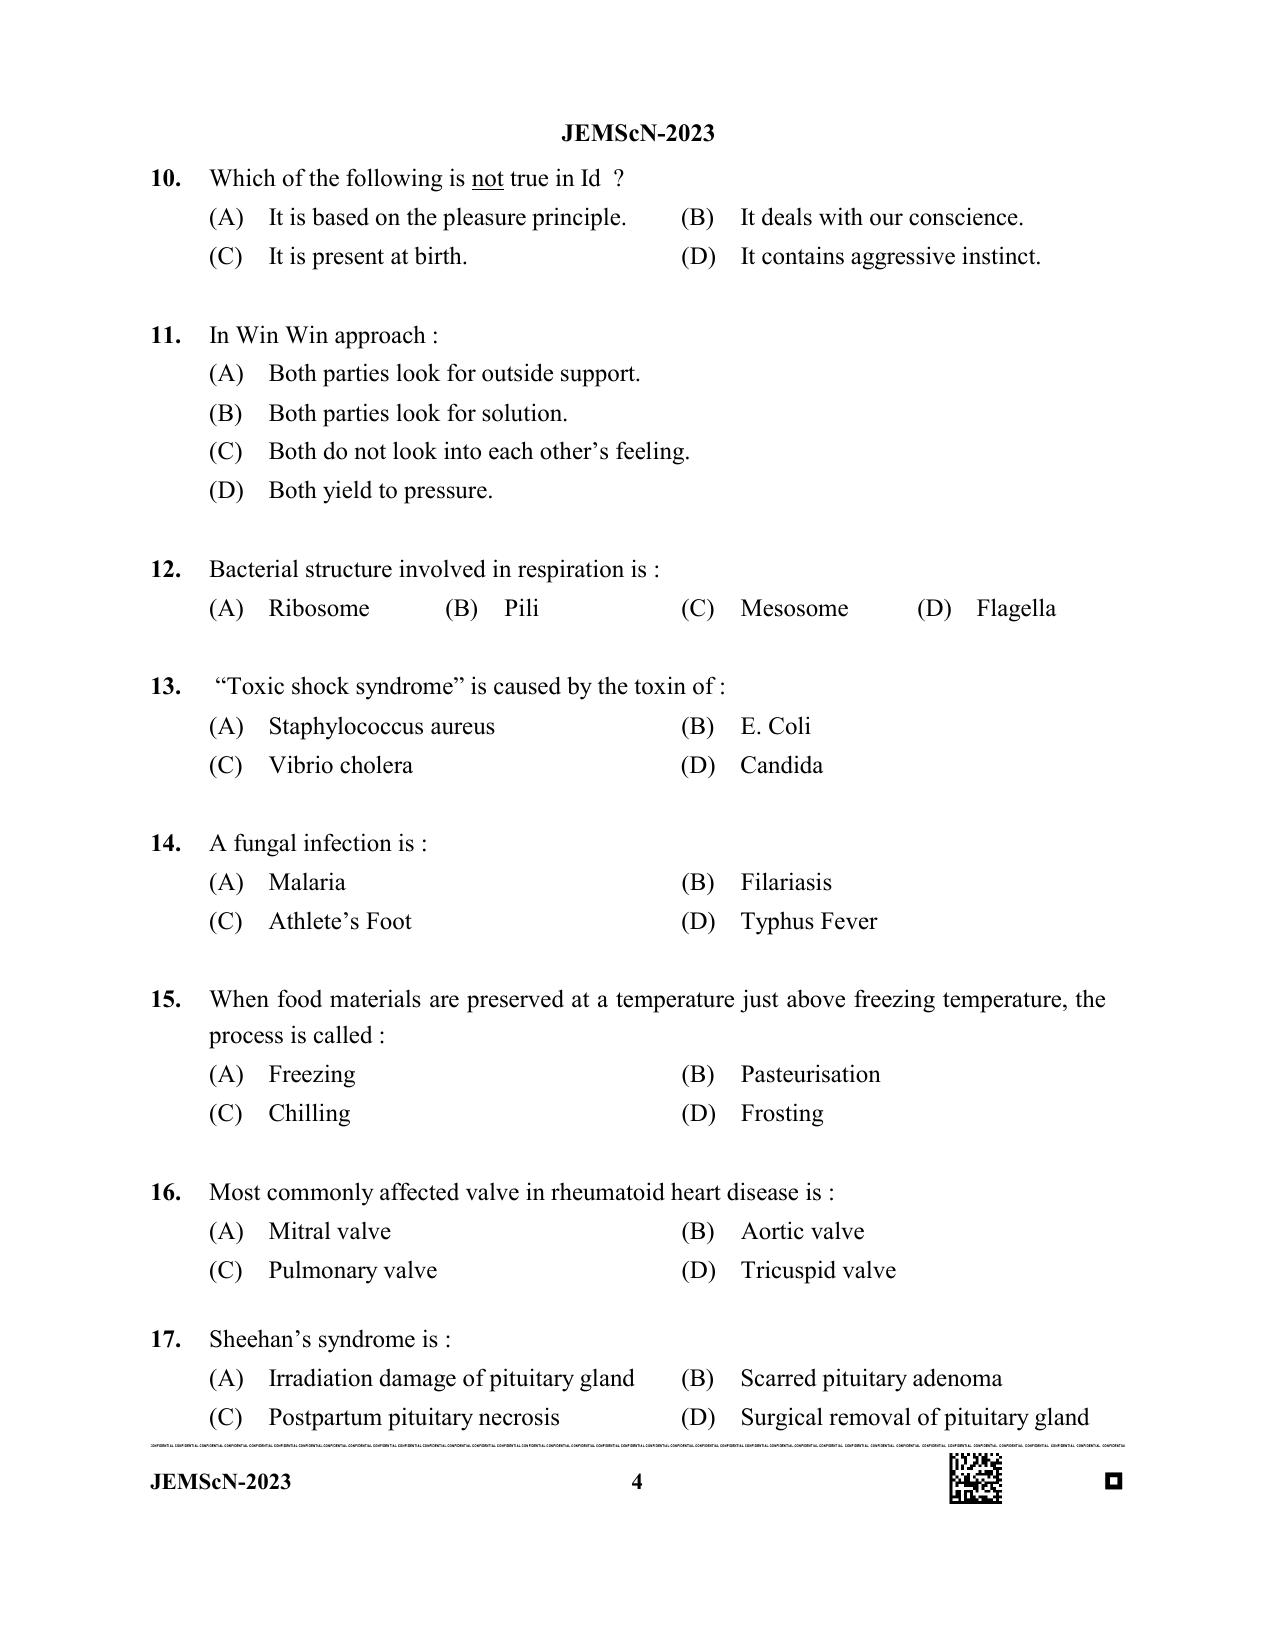 WB JEMScN 2023 Question Paper - Page 4